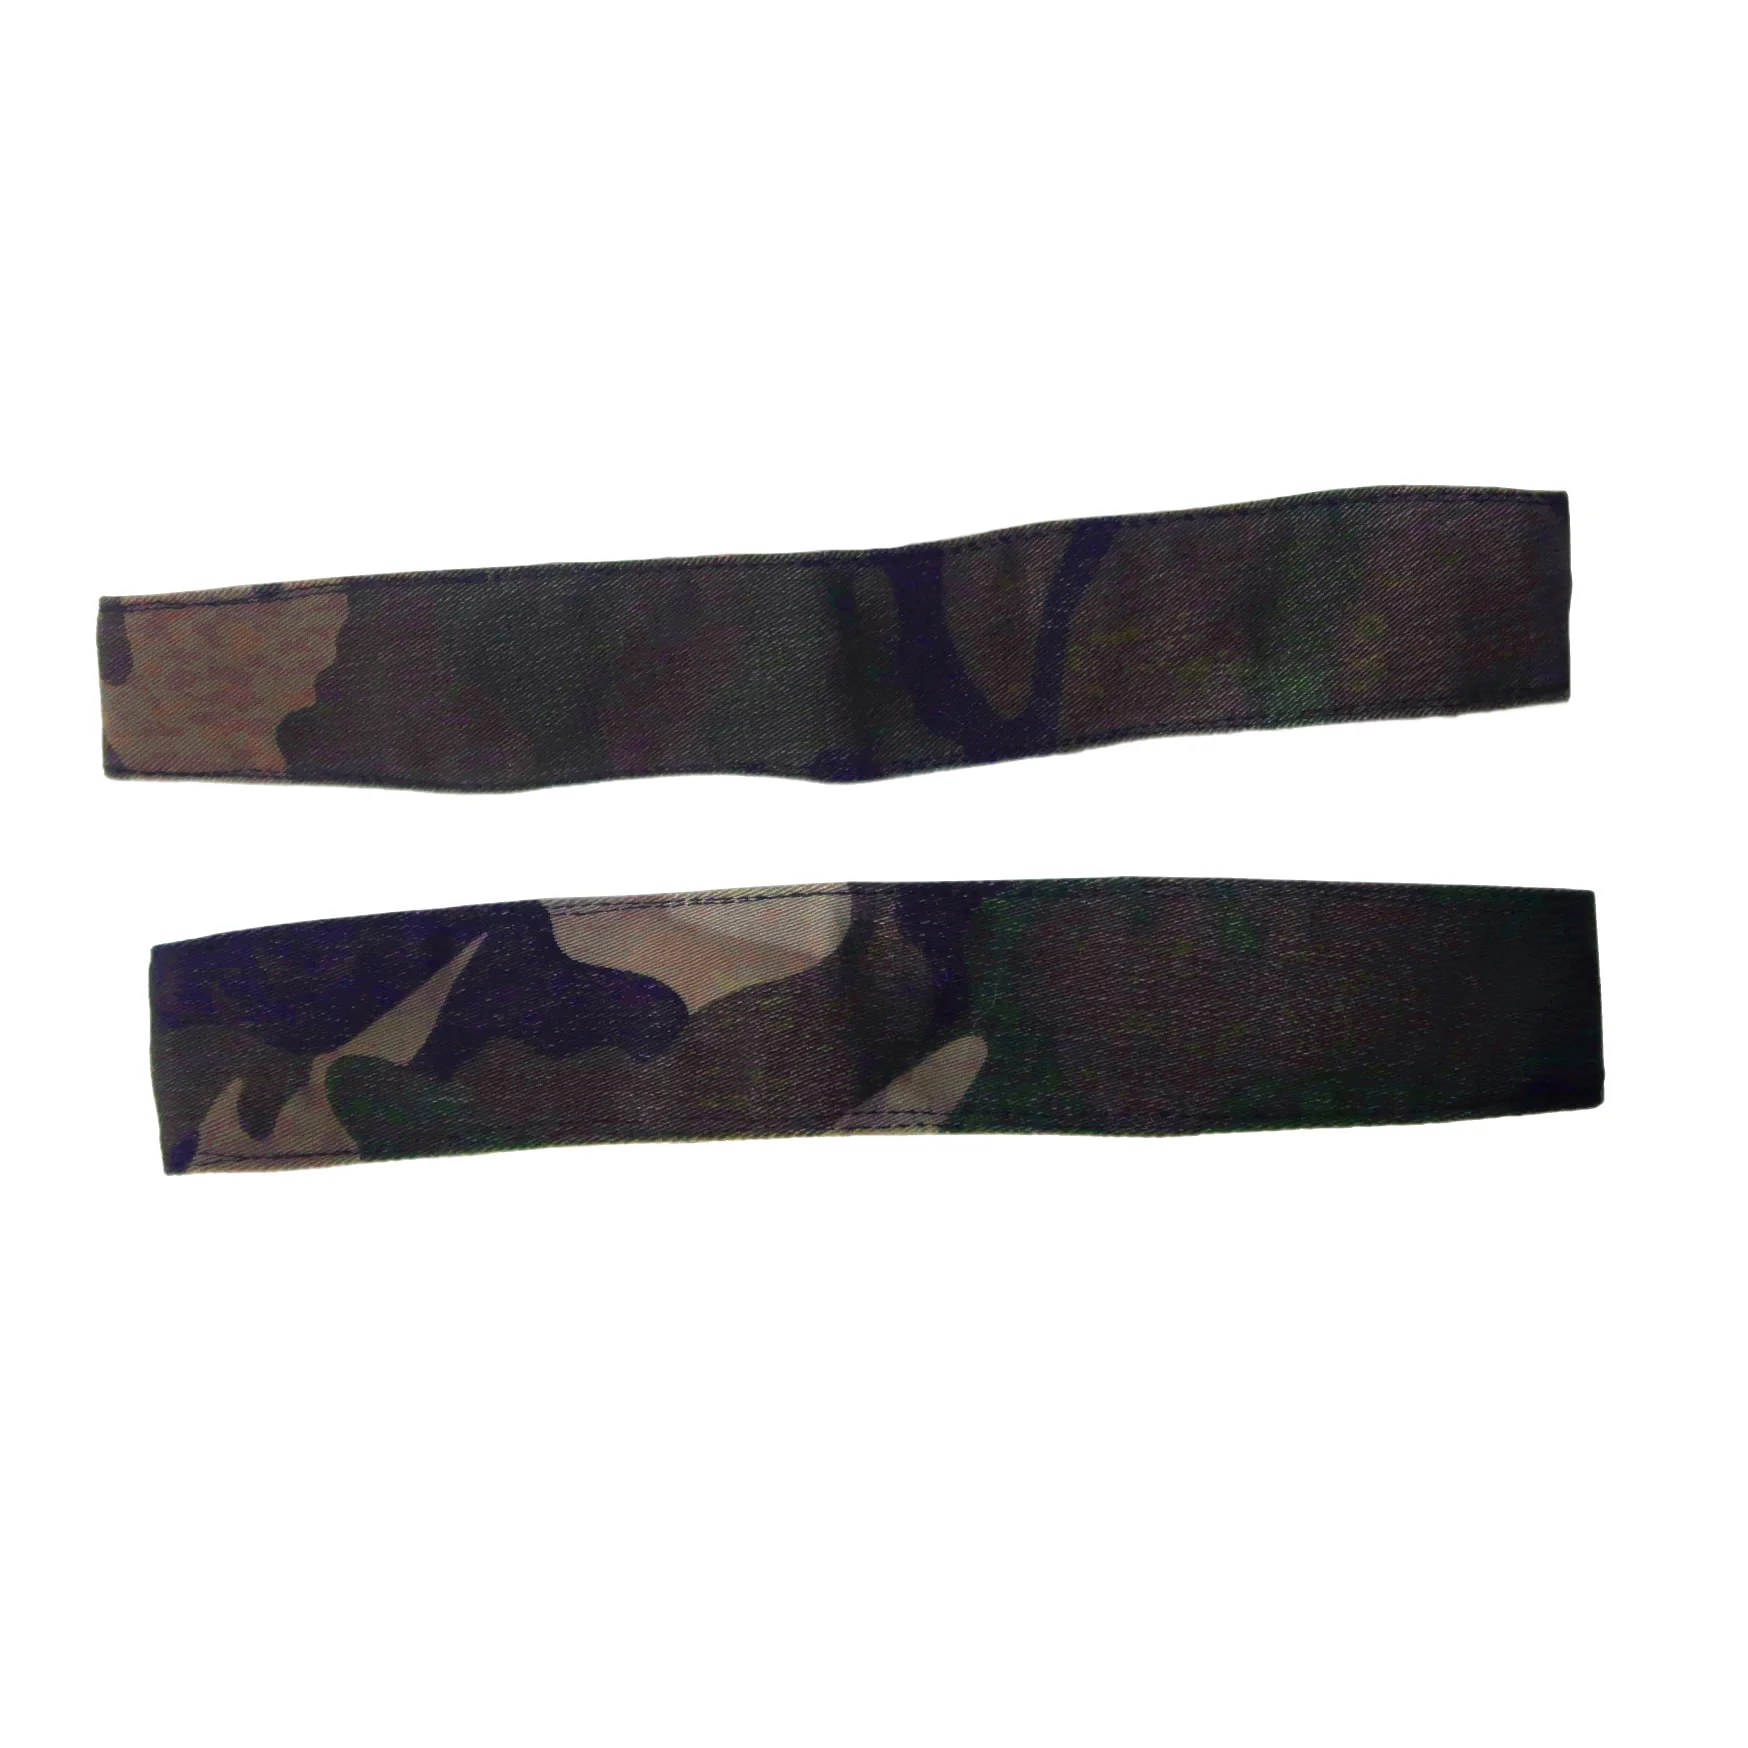 Upcycled Camouflage Stretchy Headband  - $12.00